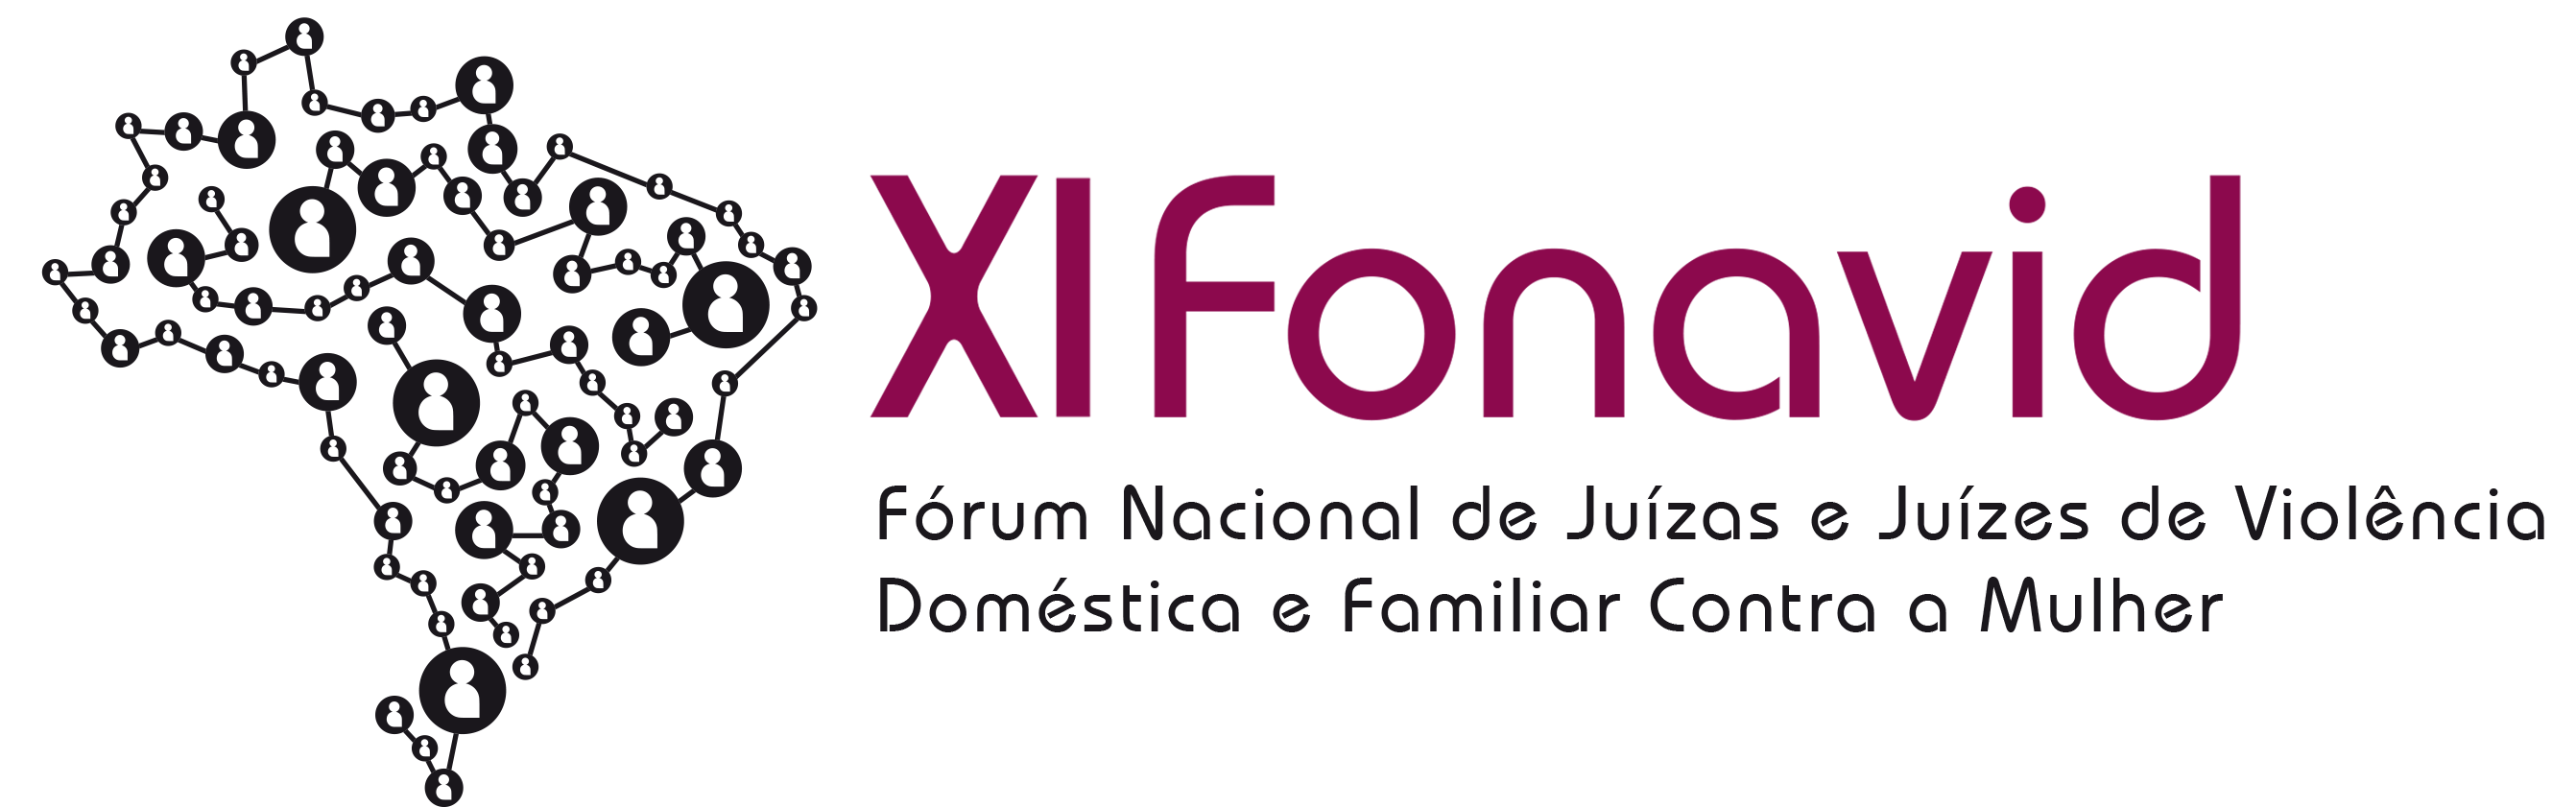 XI FONAVID Fórum Nacional de Juízas e Juízes de Violência Domestica e Familiar Contra a Mulher